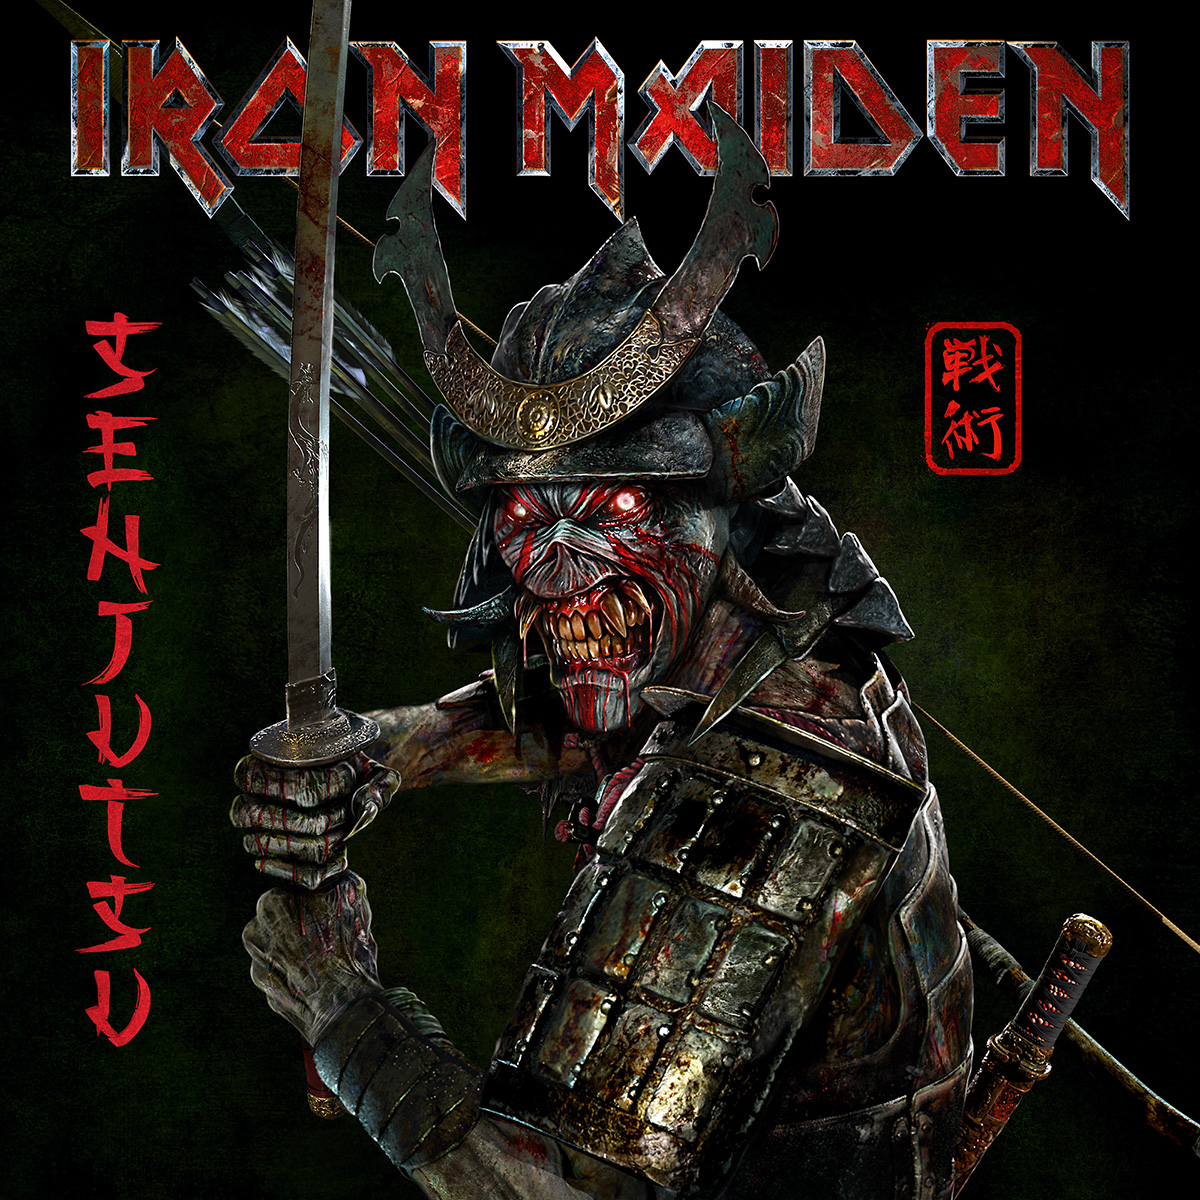 Iron Maiden Official Website